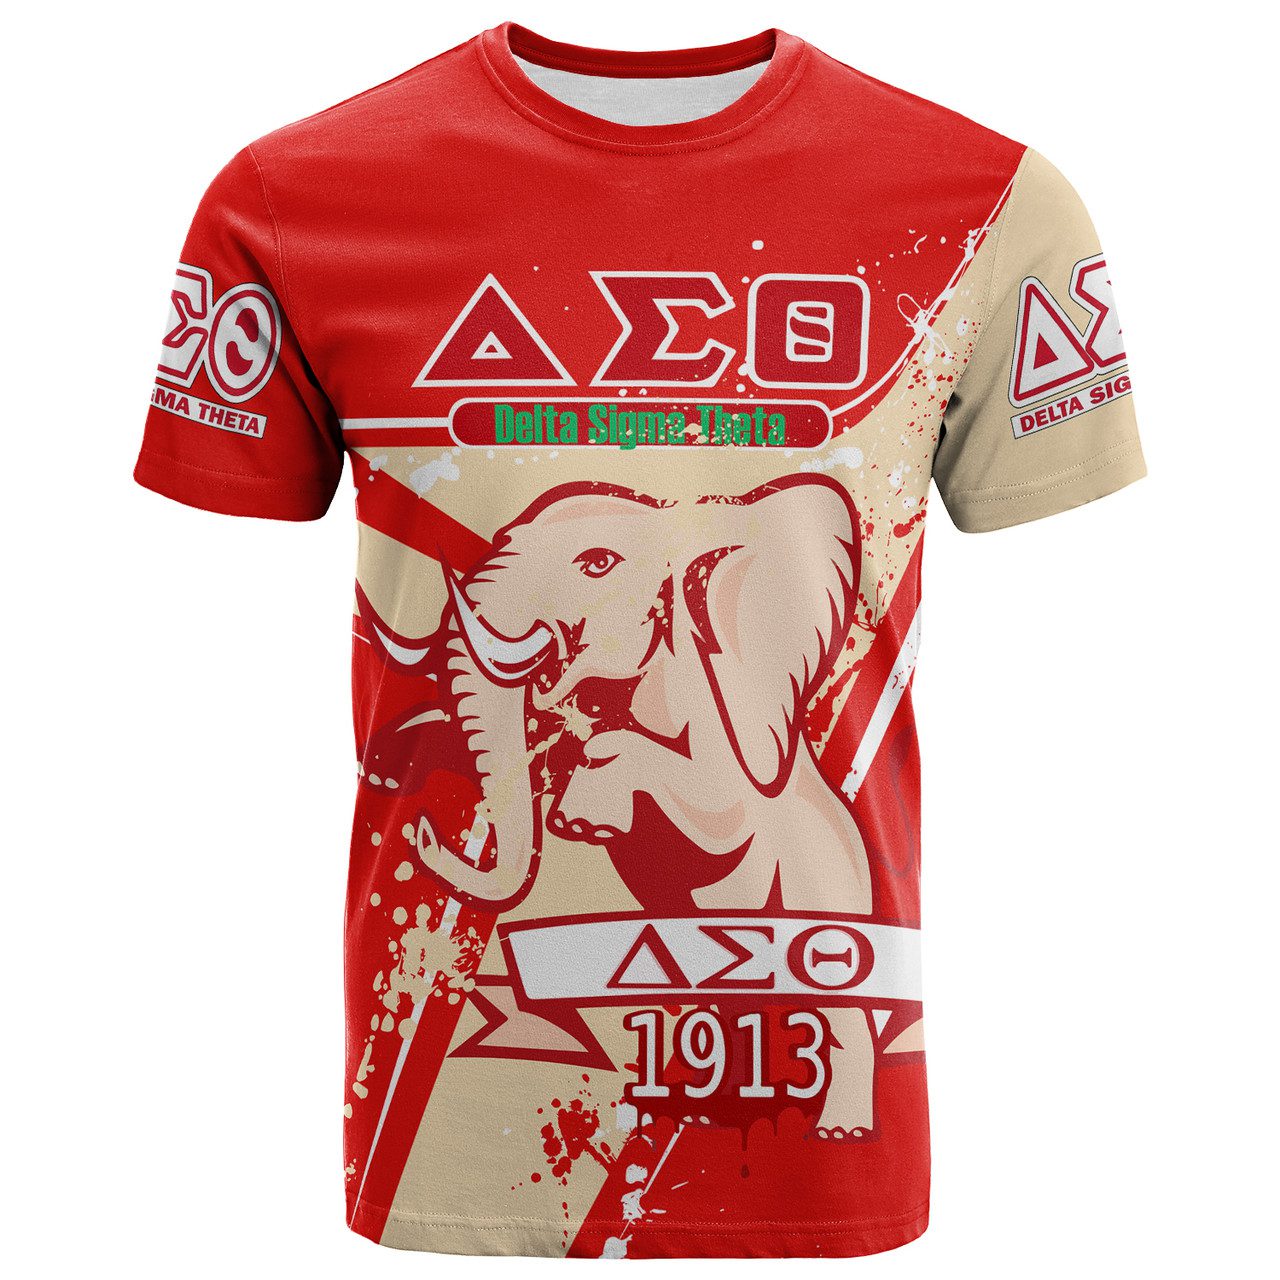 Delta Sigma Theta T-shirt – Custom Delta Sigma Theta Sorority 1913 Elephant Splash Style T-shirt